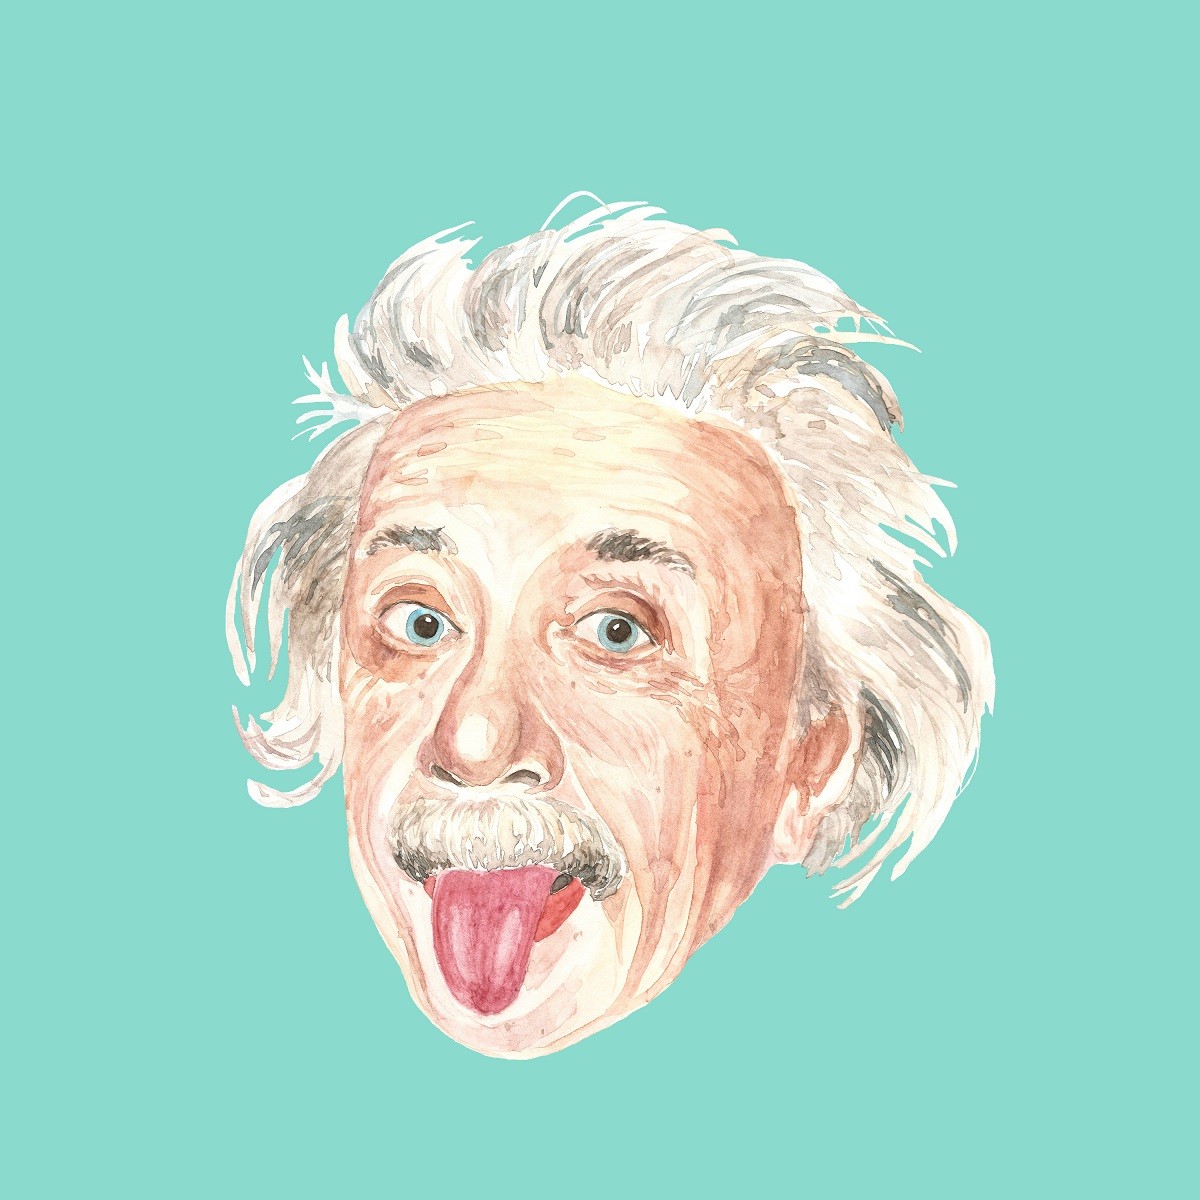 Watercolor illustration of Albert Einstein on green background.